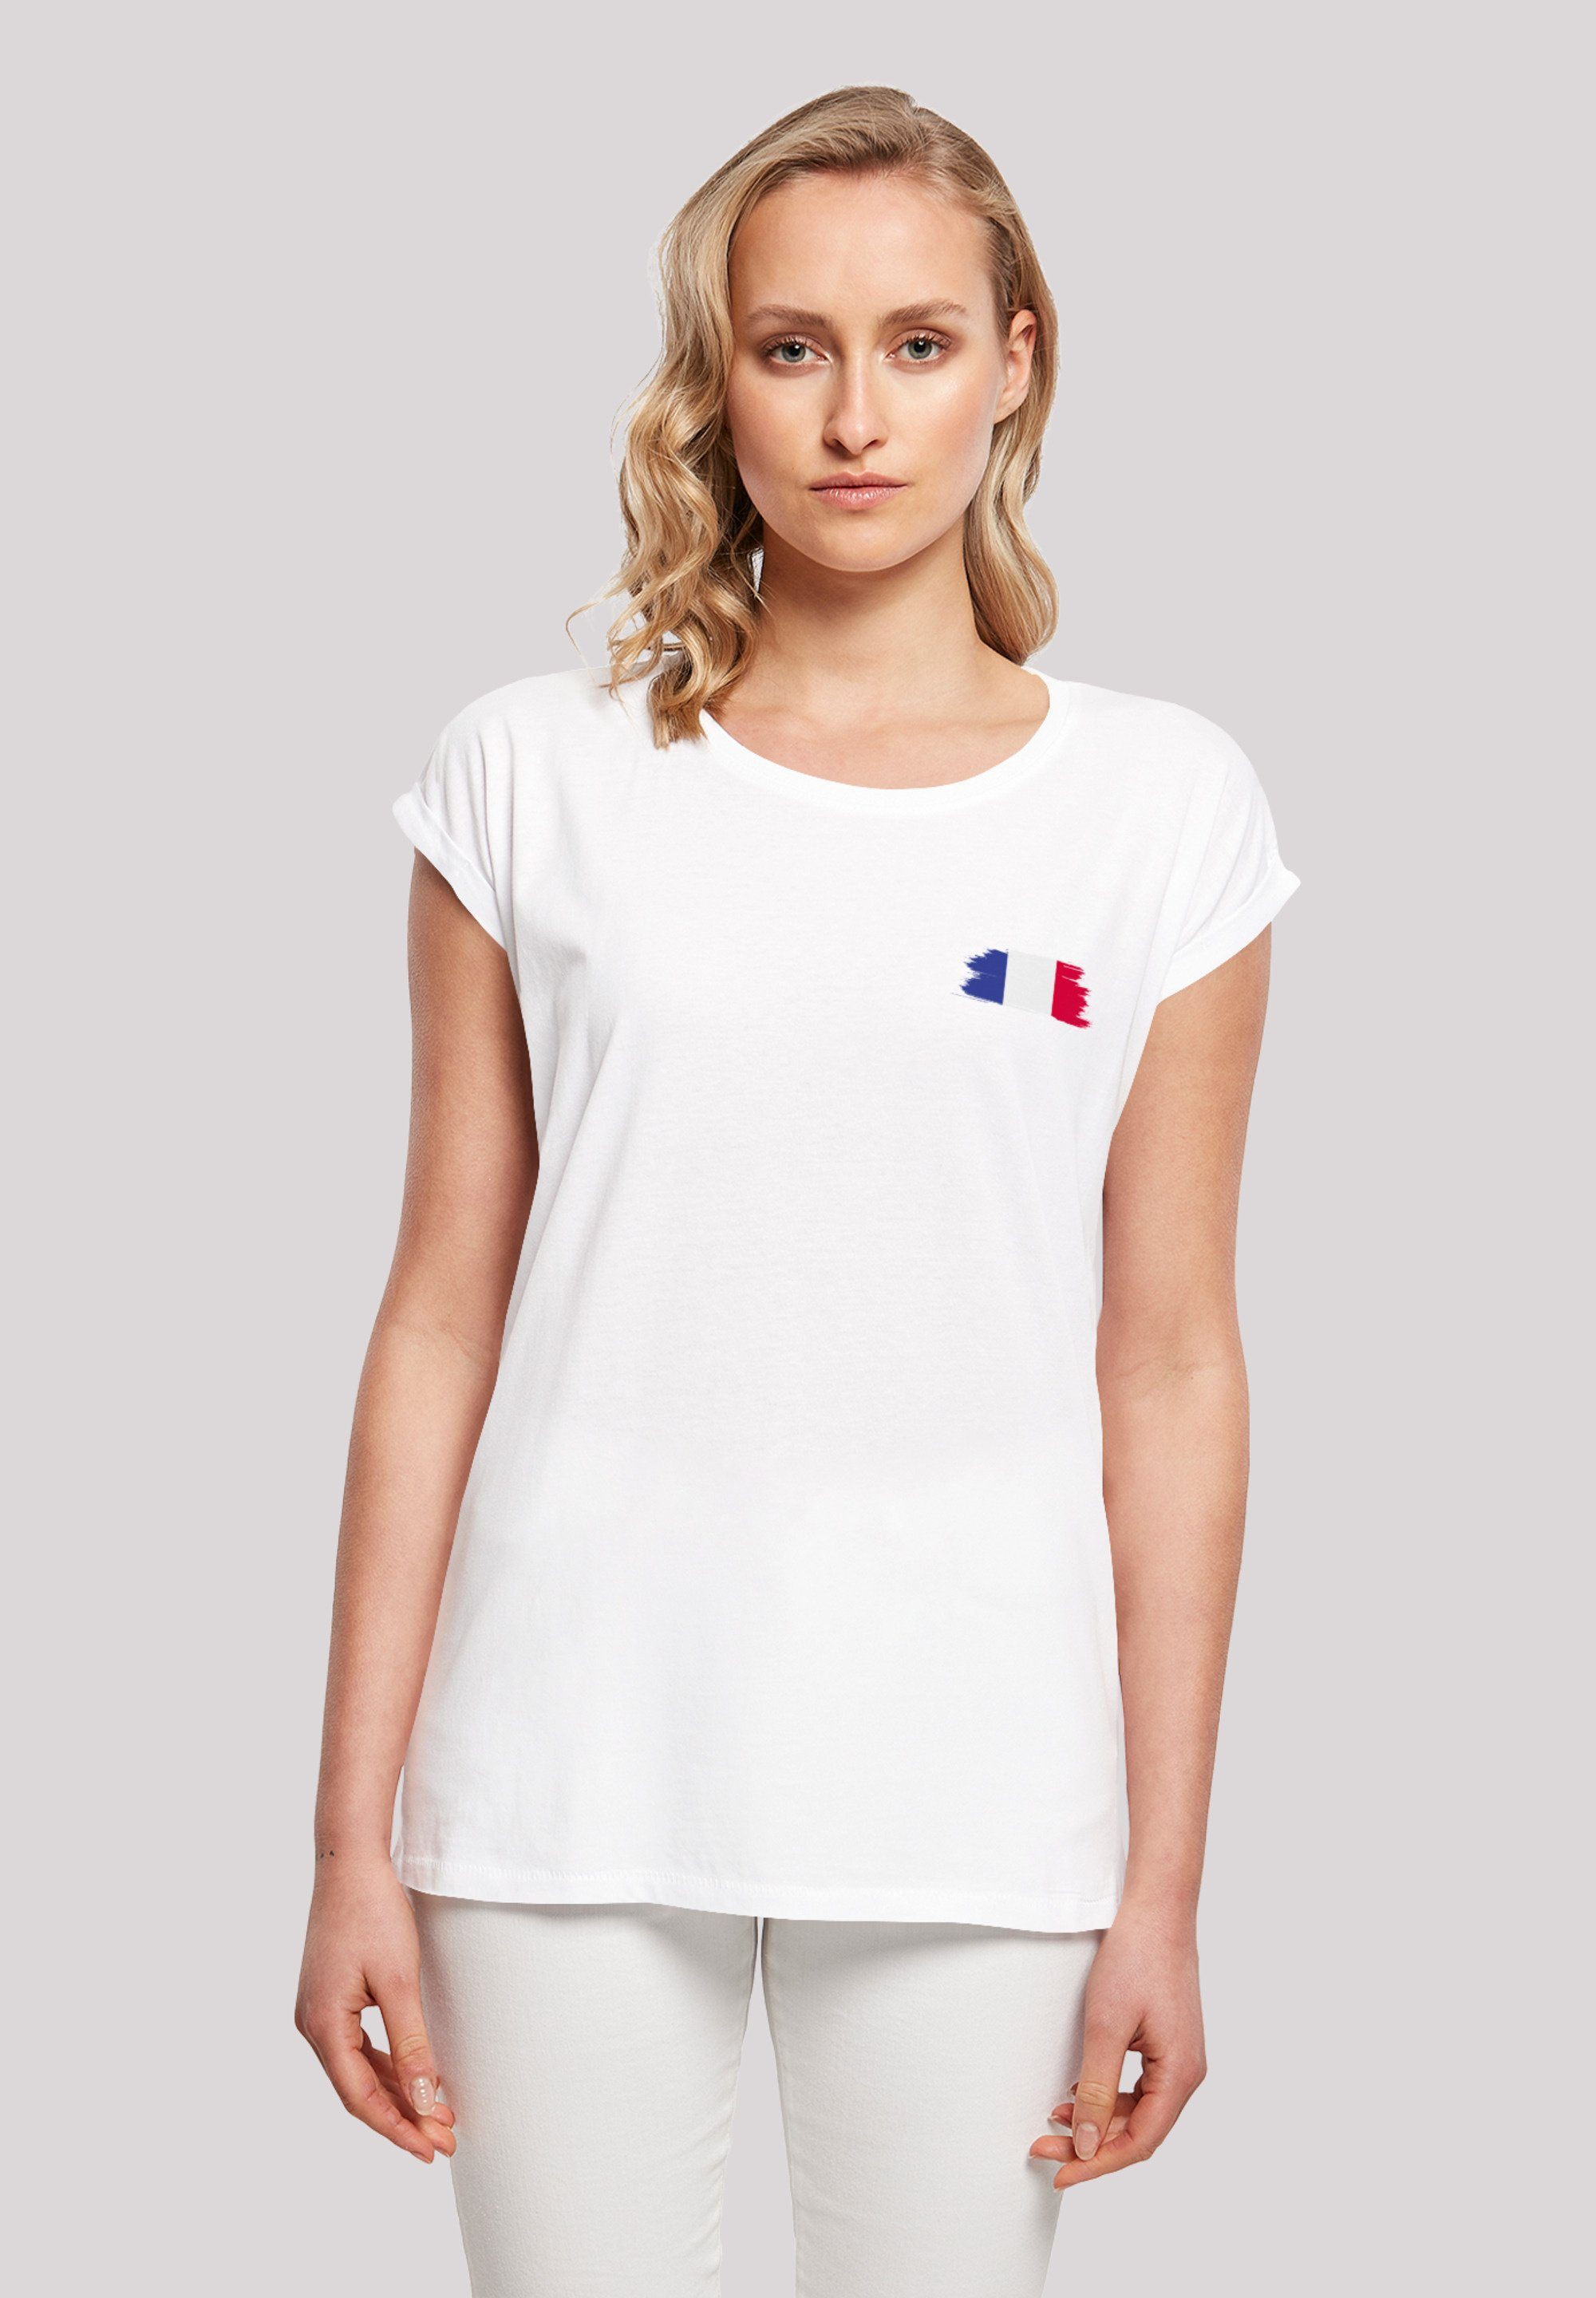 ist groß T-Shirt F4NT4STIC und trägt Flagge cm Frankreich Größe 170 Print, France Model Das Fahne M